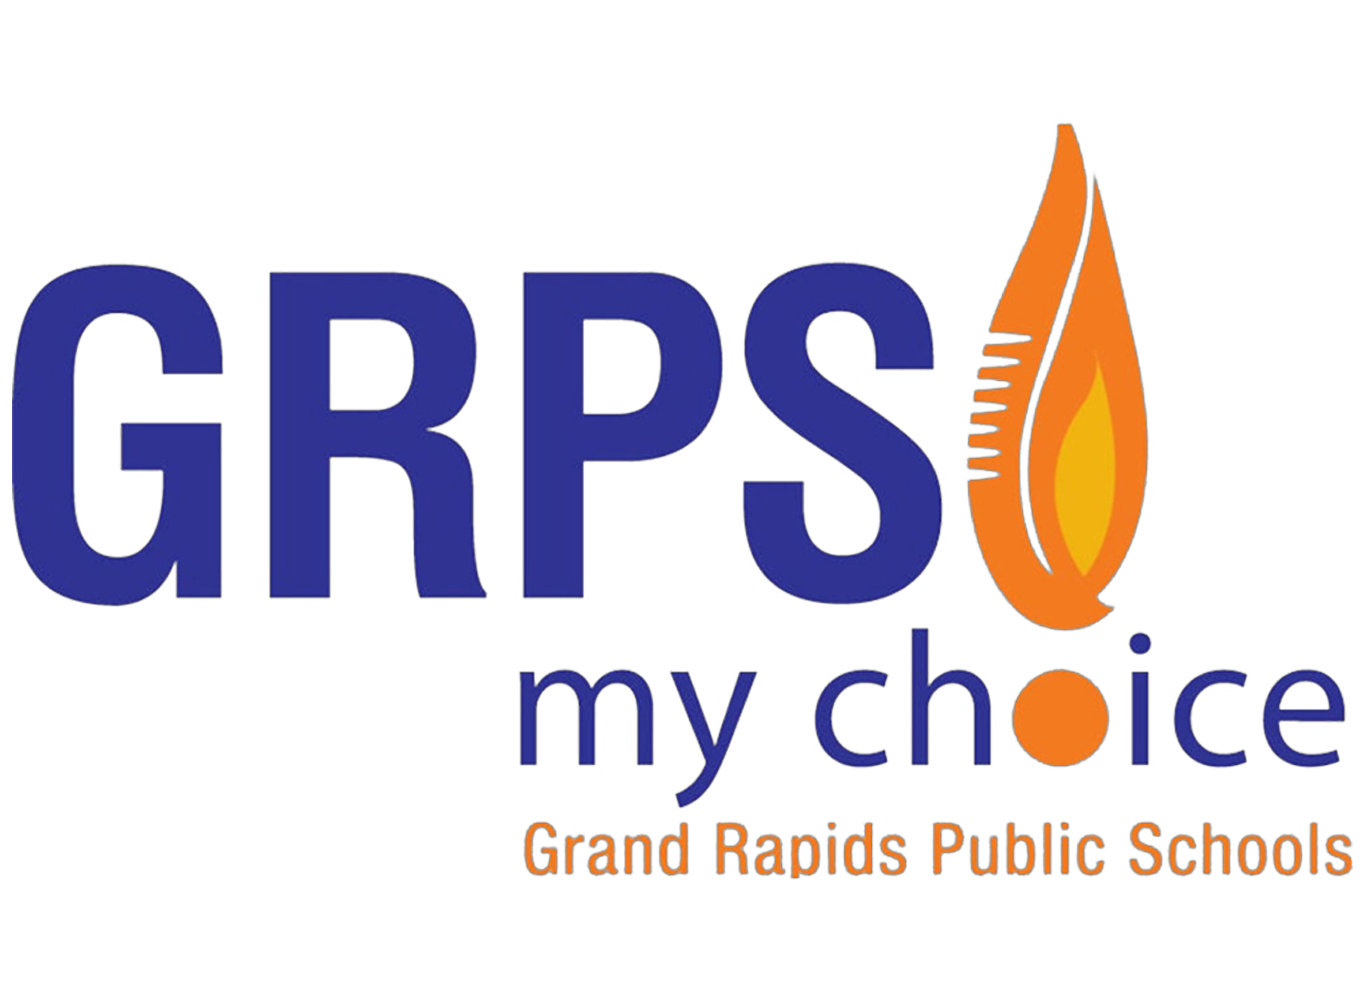 Grand Rapids Public Schools